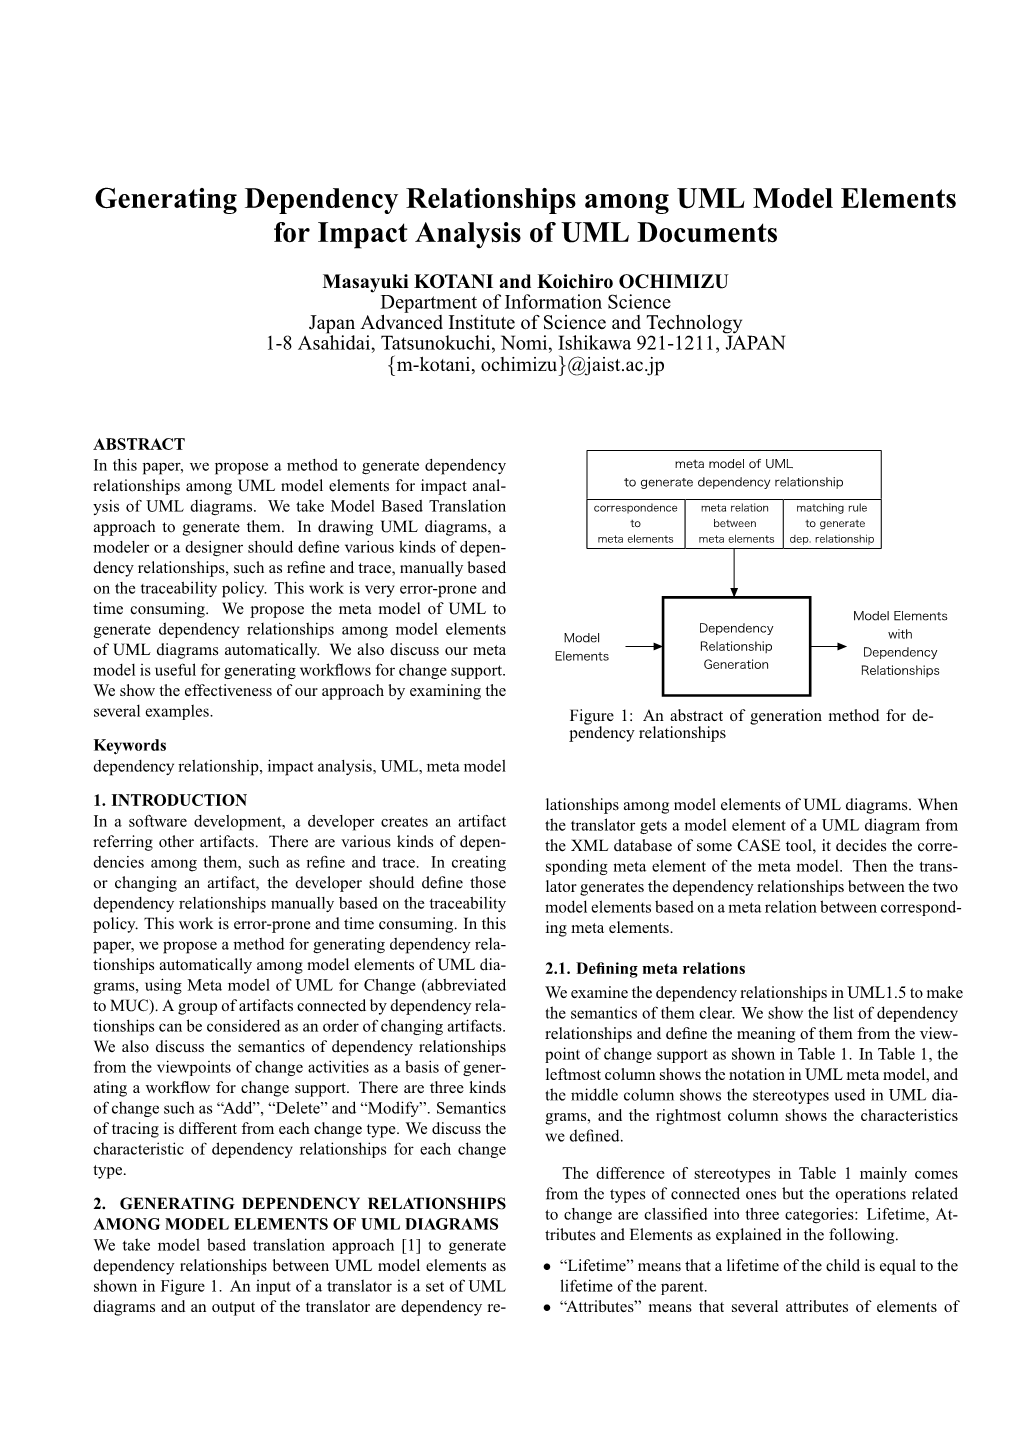 Generating Dependency Relationships Among UML Model Elements for Impact Analysis of UML Documents